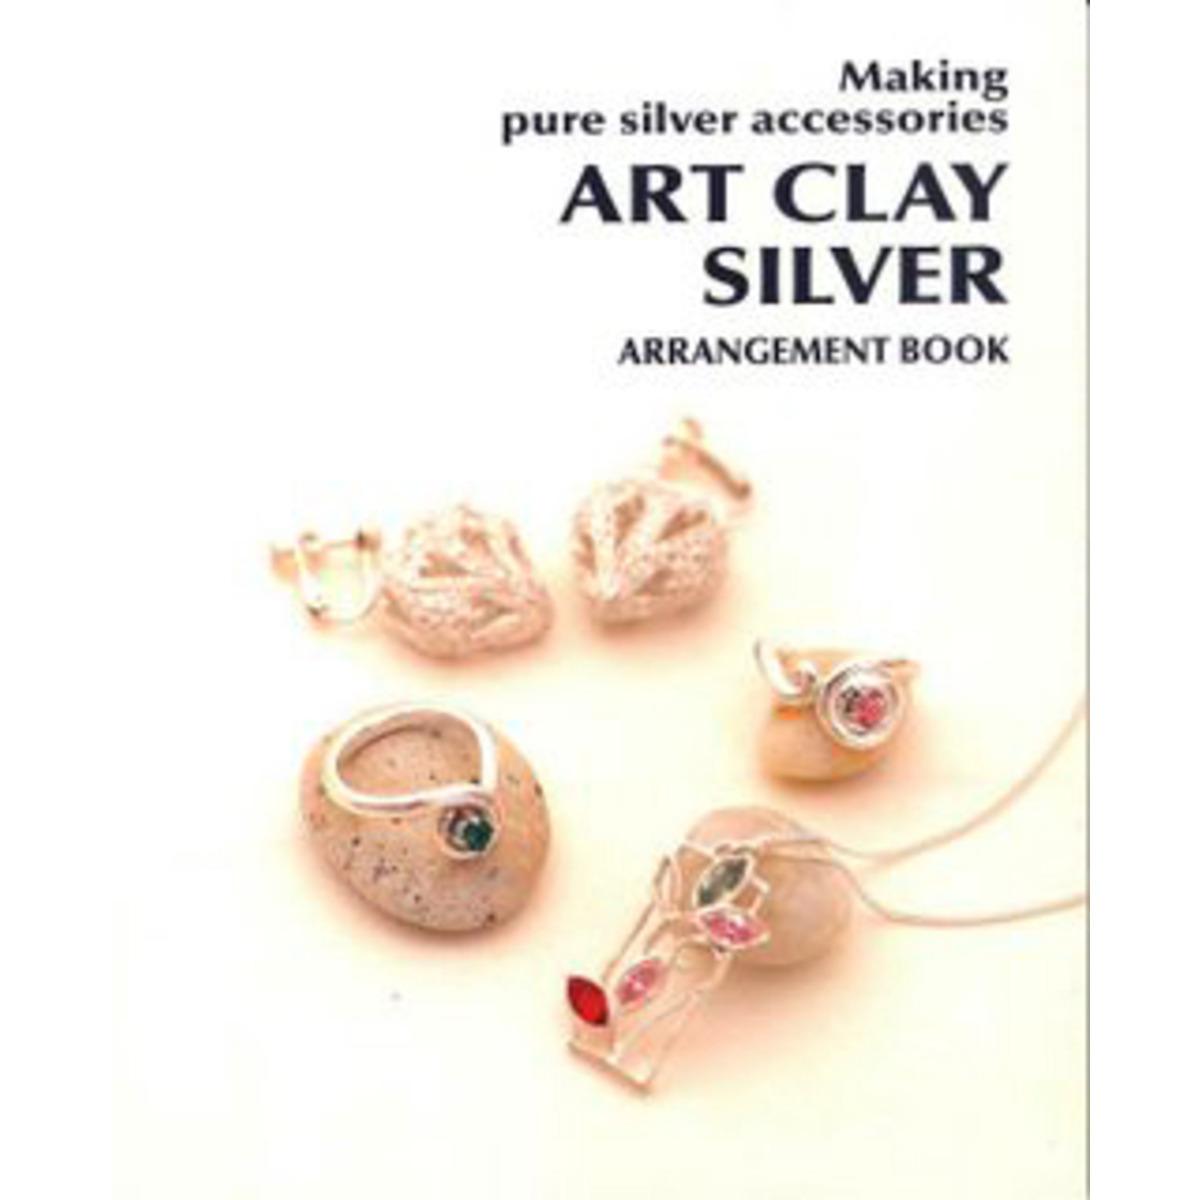 Art Clay Silver - Making Piure Silver Accessories Basic Book